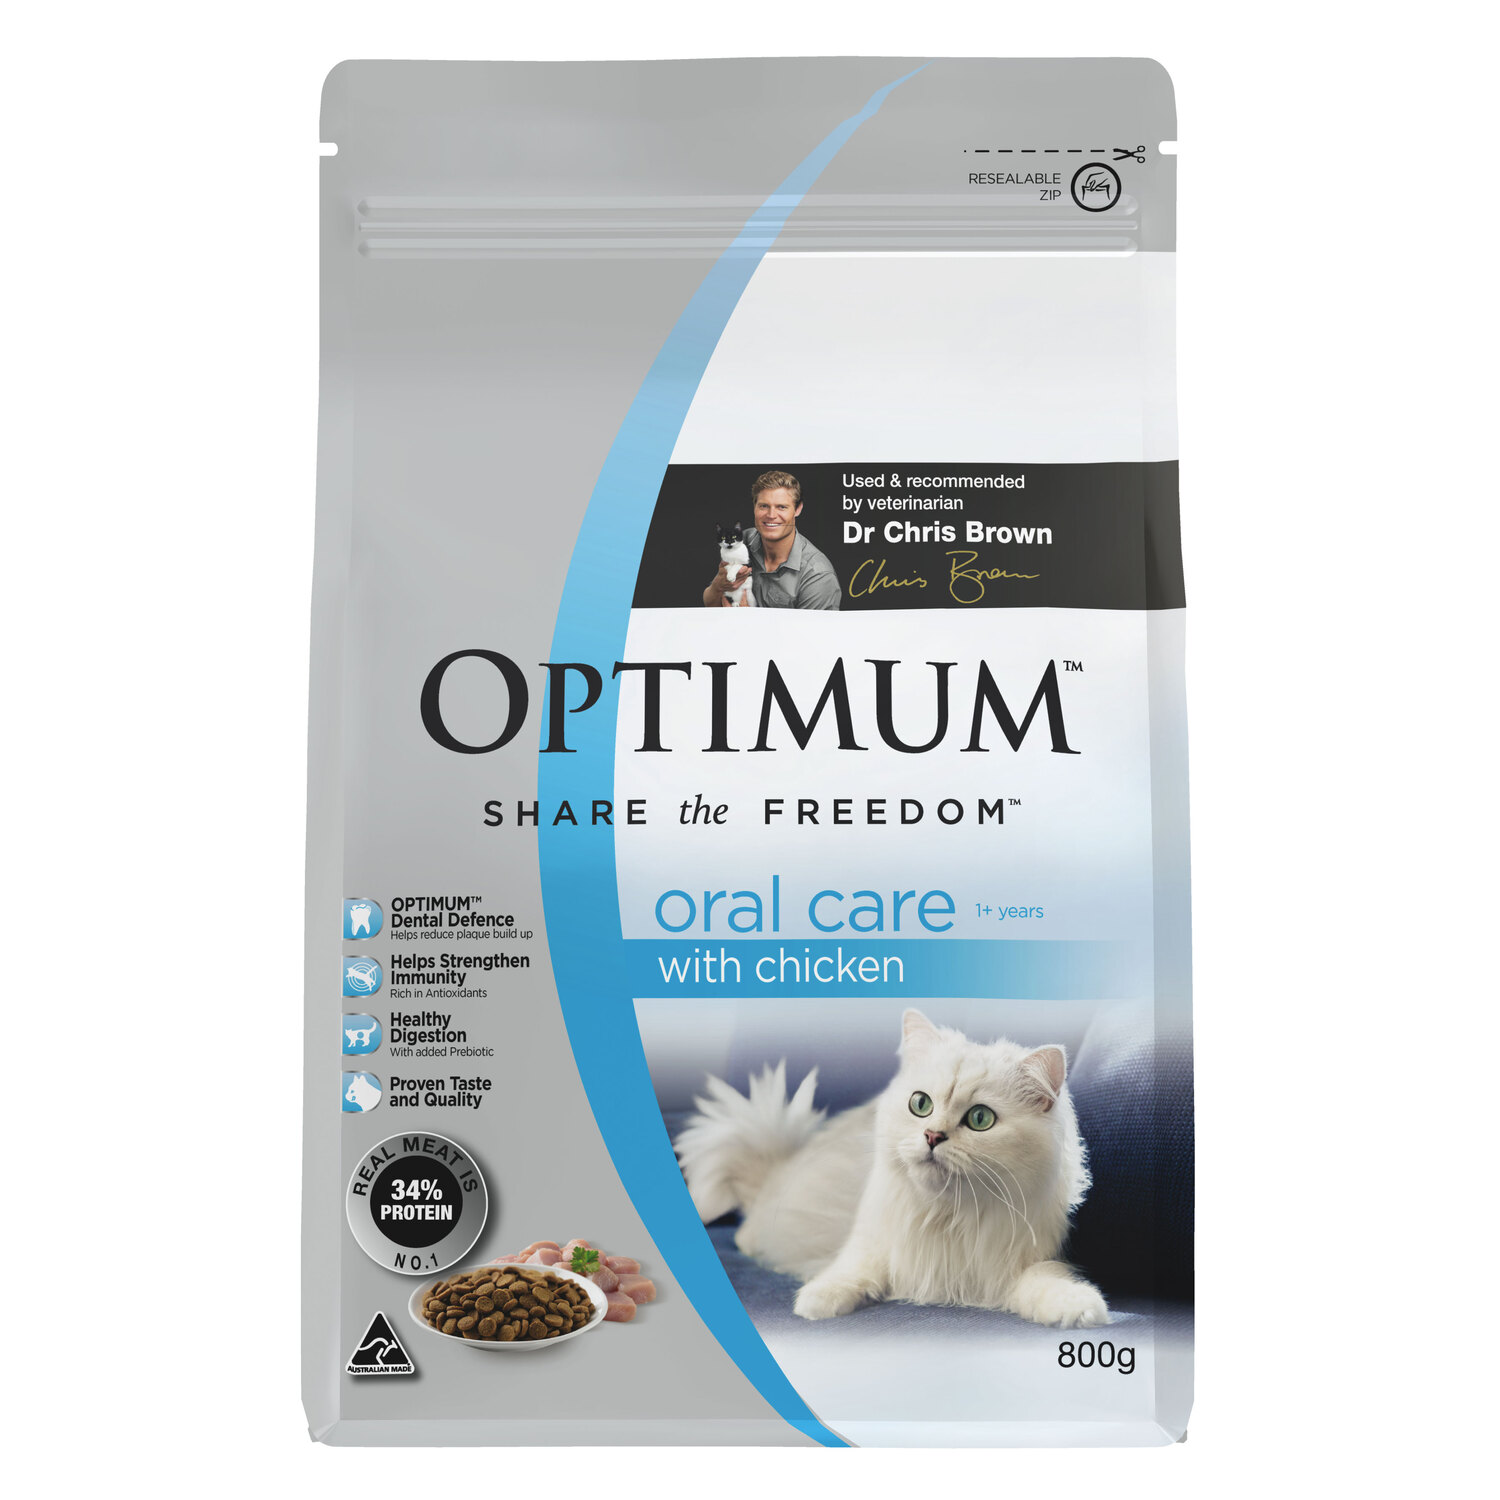 OPTIMUMTM 貓乾糧 成貓 口腔護理配方(雞肉) 800gx6
OPT Cat Oral Care Ck 6x800g